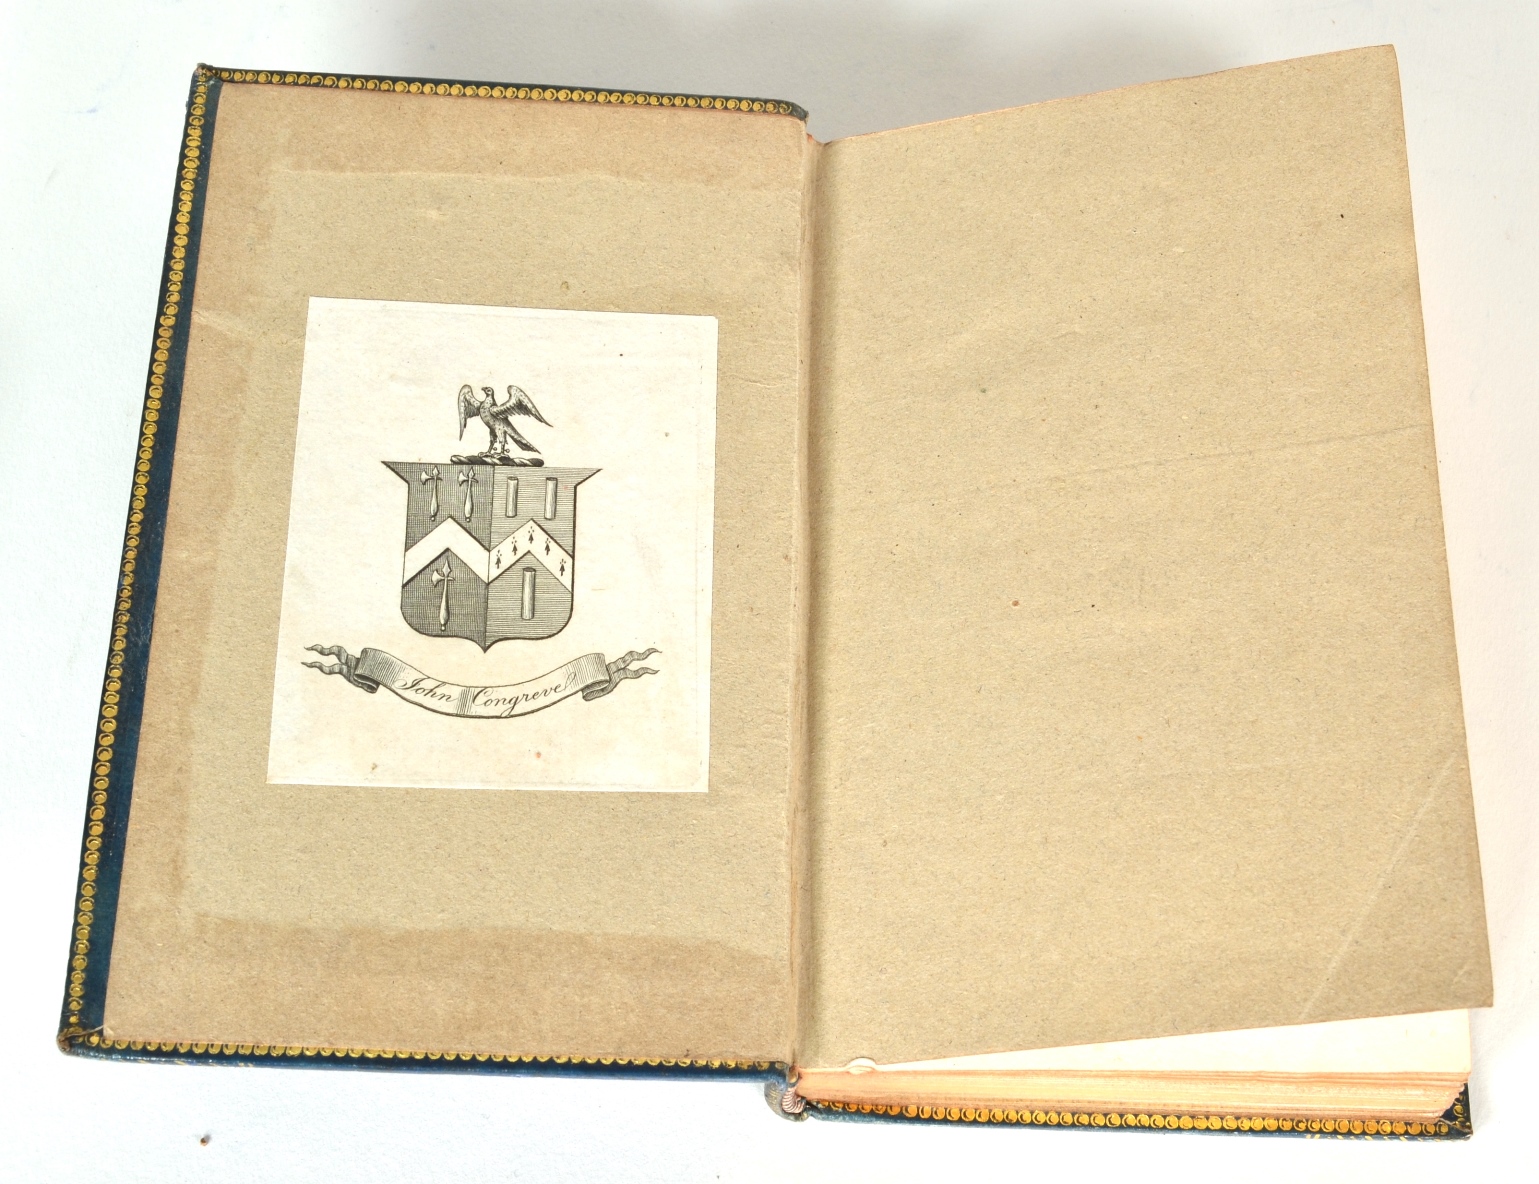 The British Essayists, Complete Set in 45 Volumes, 1819